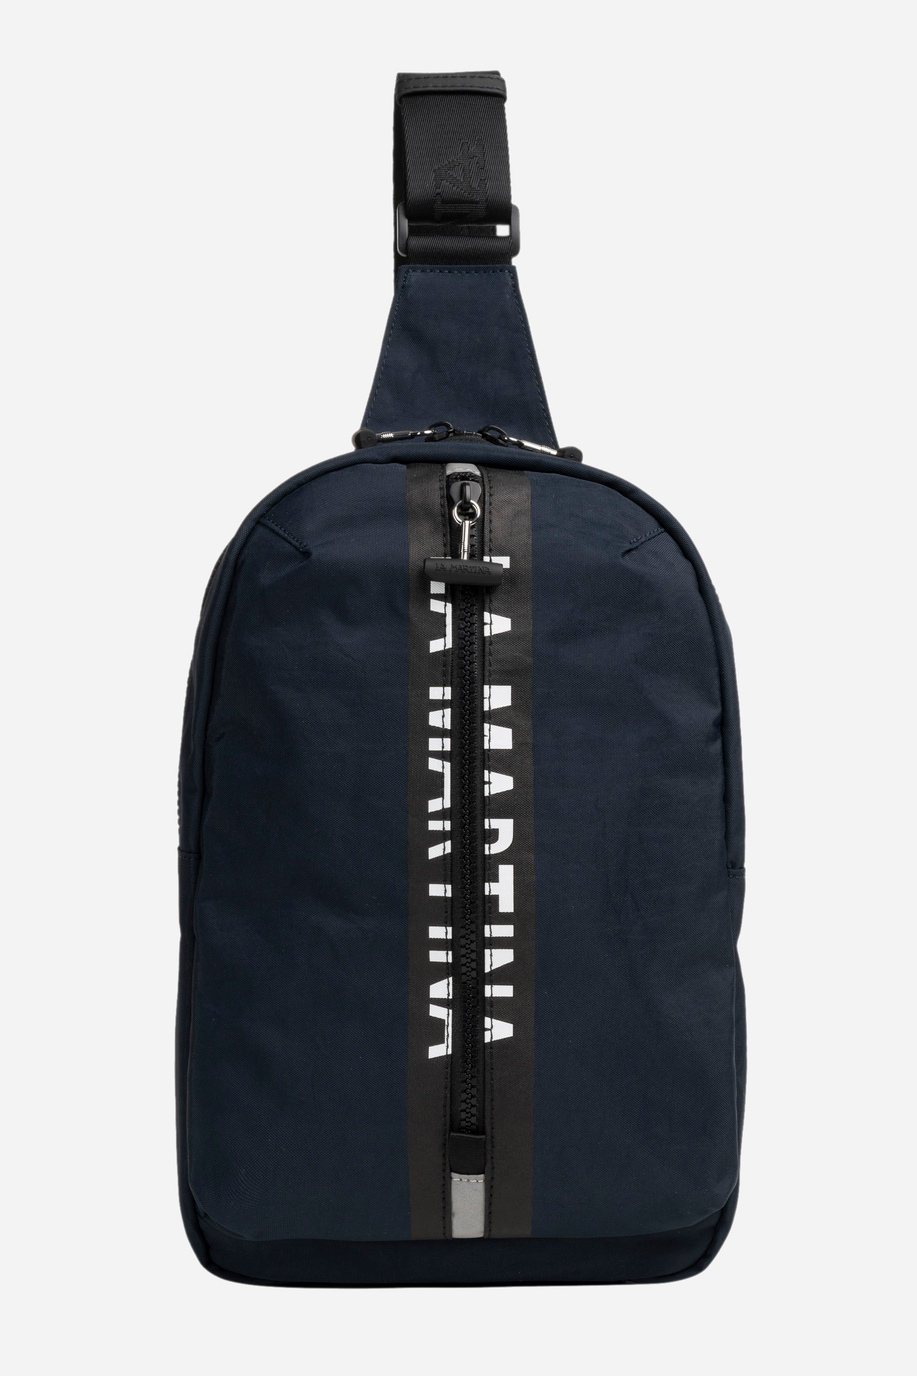 Herren-Bodybag aus Nylon - Yuri - Taschen | La Martina - Official Online Shop